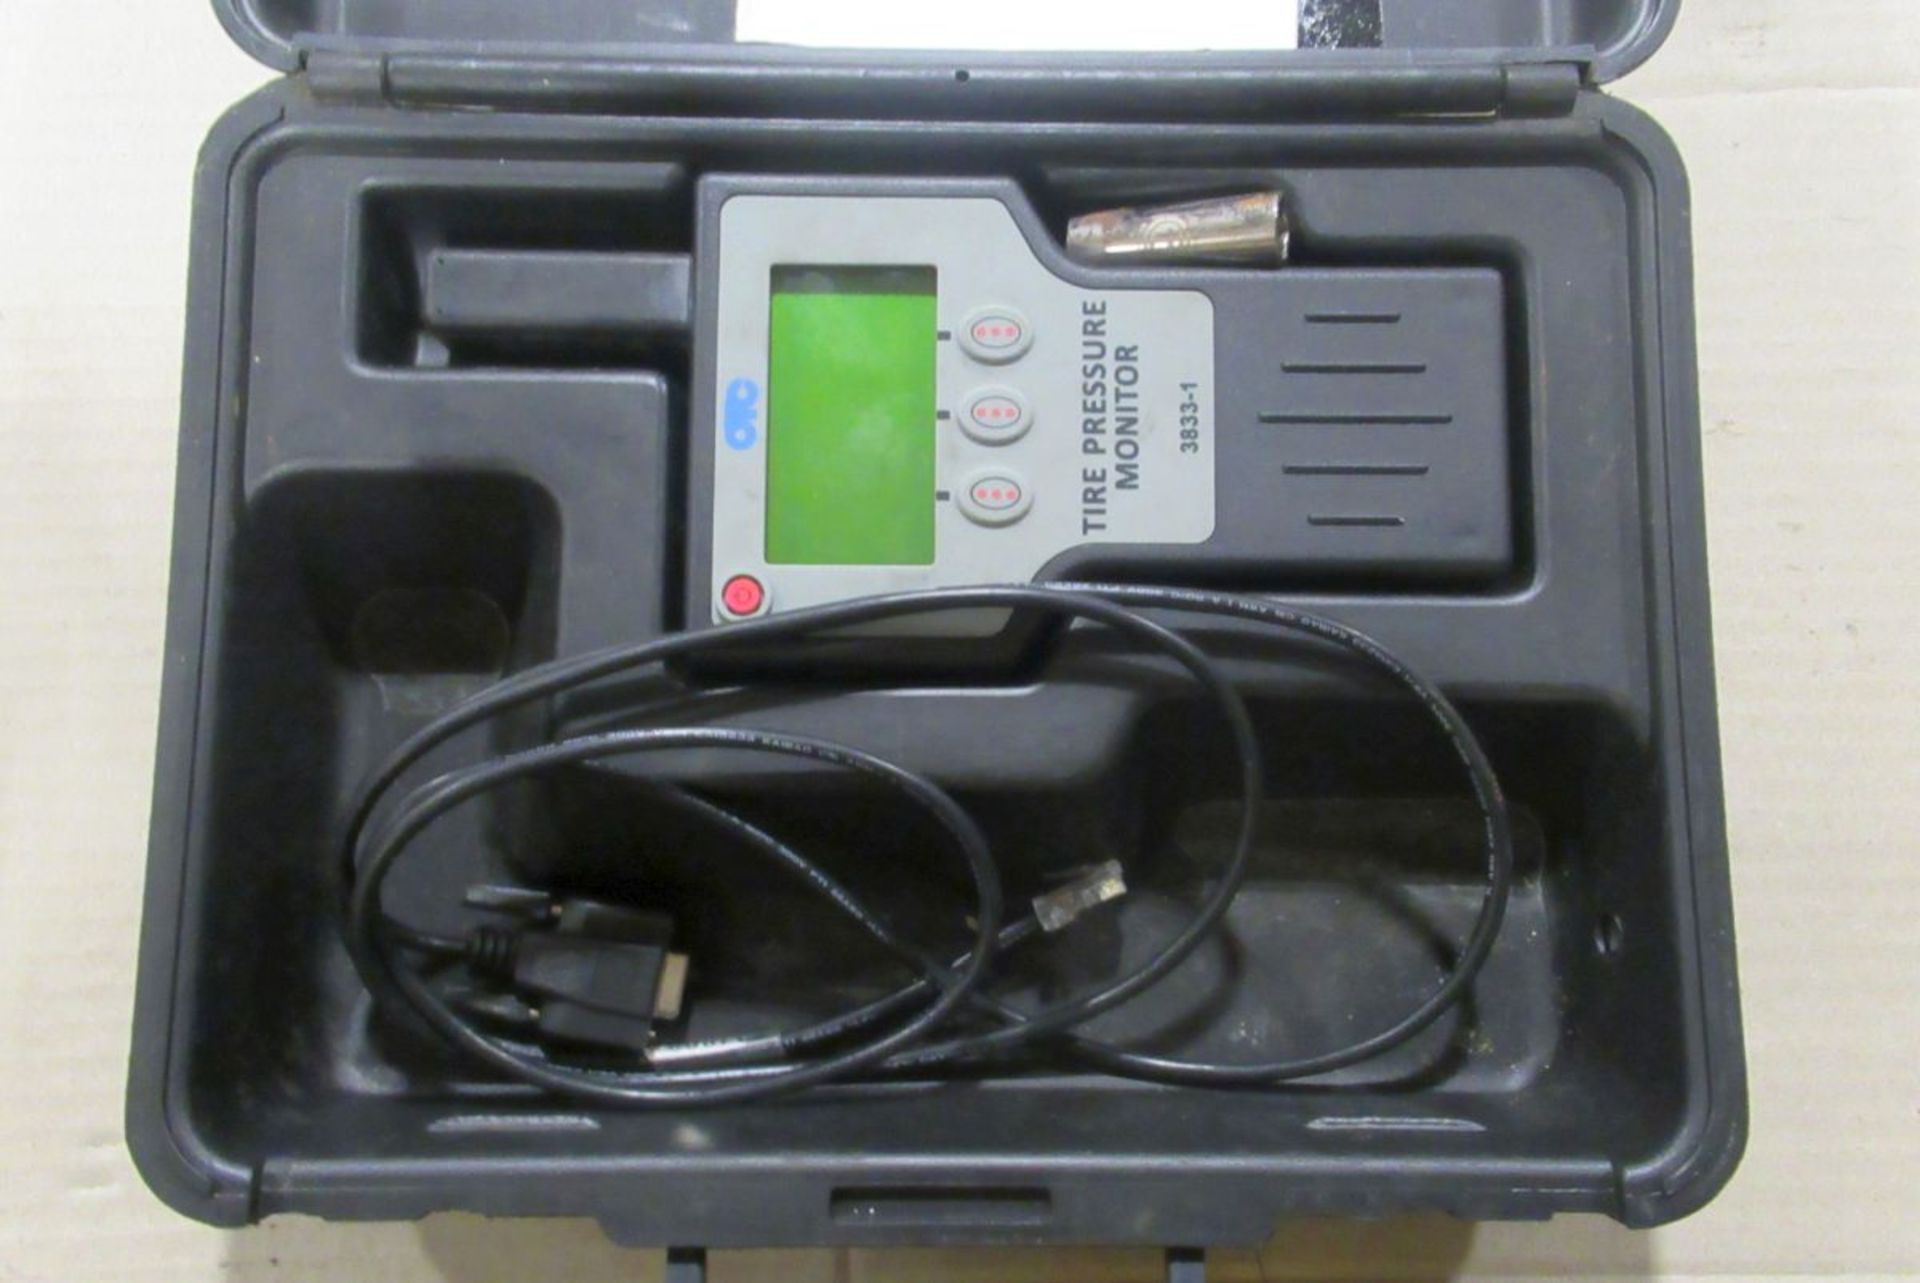 Smog Tamer Emissions Inspection Unit, Printer, Bosch Diagnostics, Etc. - Image 8 of 12